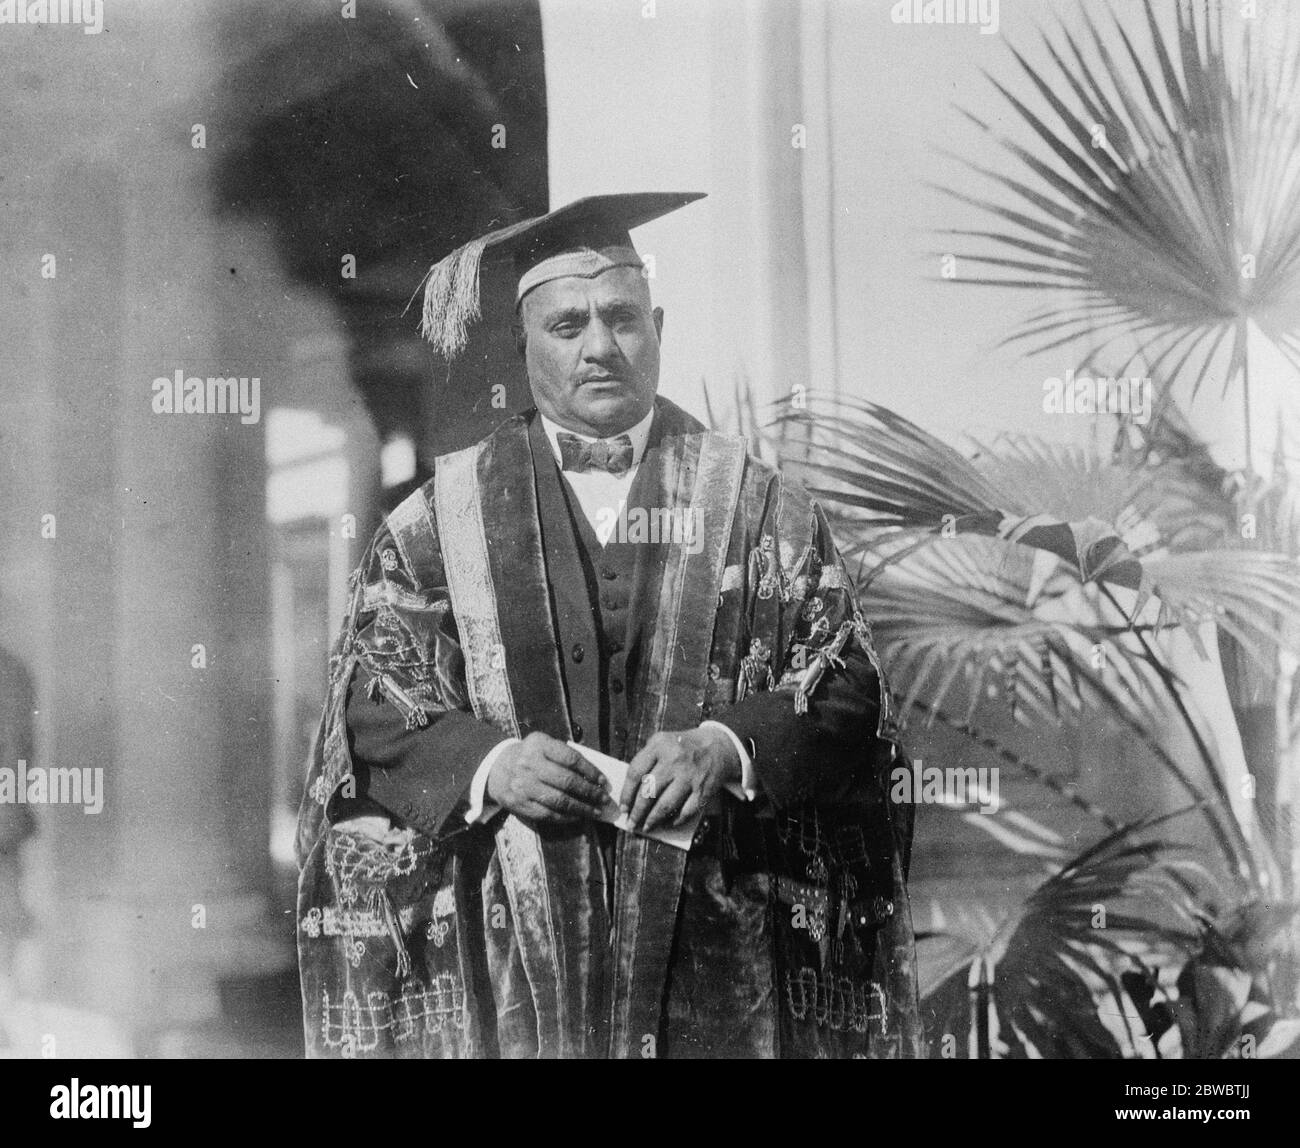 Vice Chancellor of Delhi University . Sir Hari Singh Gour in his robes as Vice Chancellor of Delhi University . 29 March 1926 Stock Photo